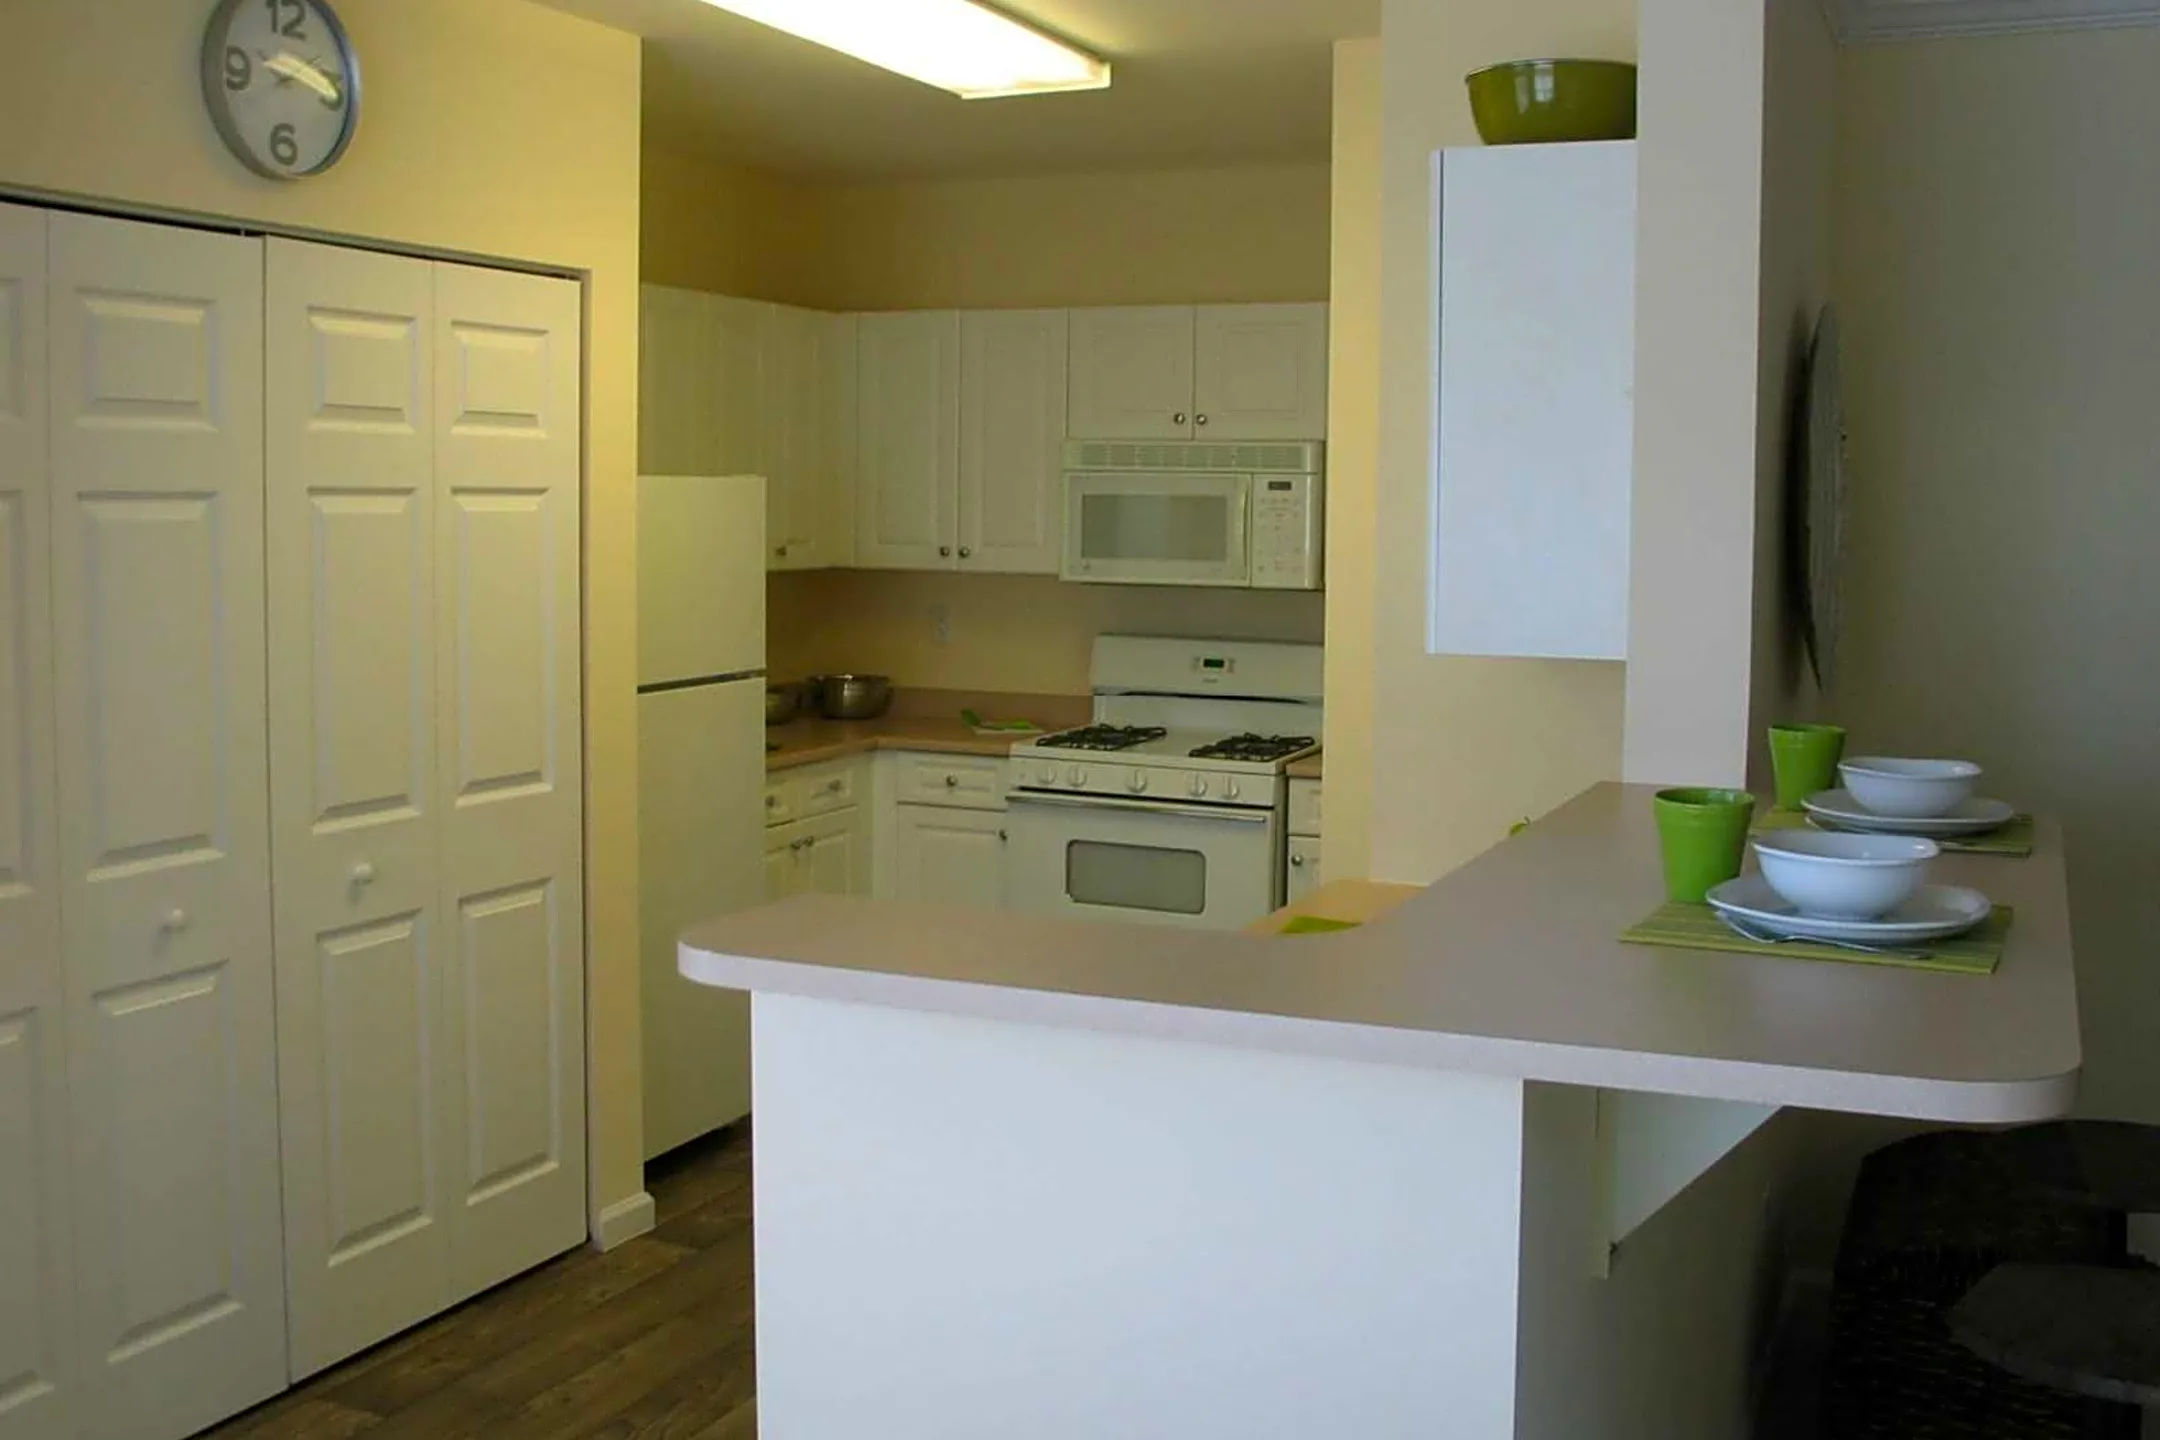 The Ledges Apartments - Groton, CT 06340